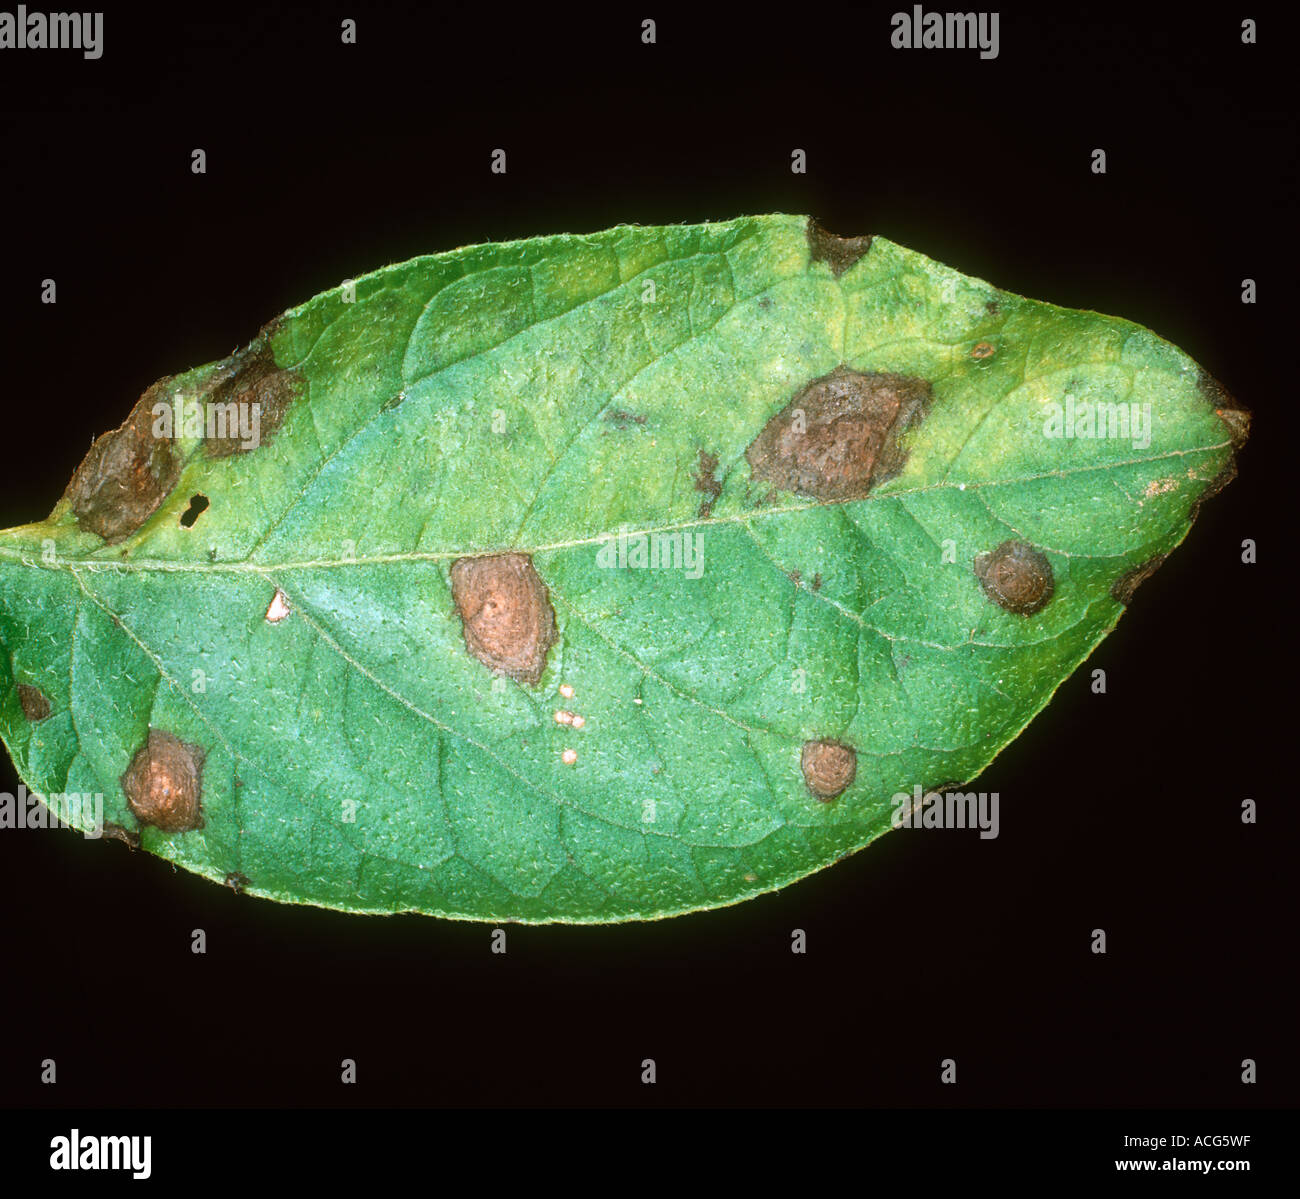 Early blight Alternaria alternata leaf spotting on potato leaf Stock Photo